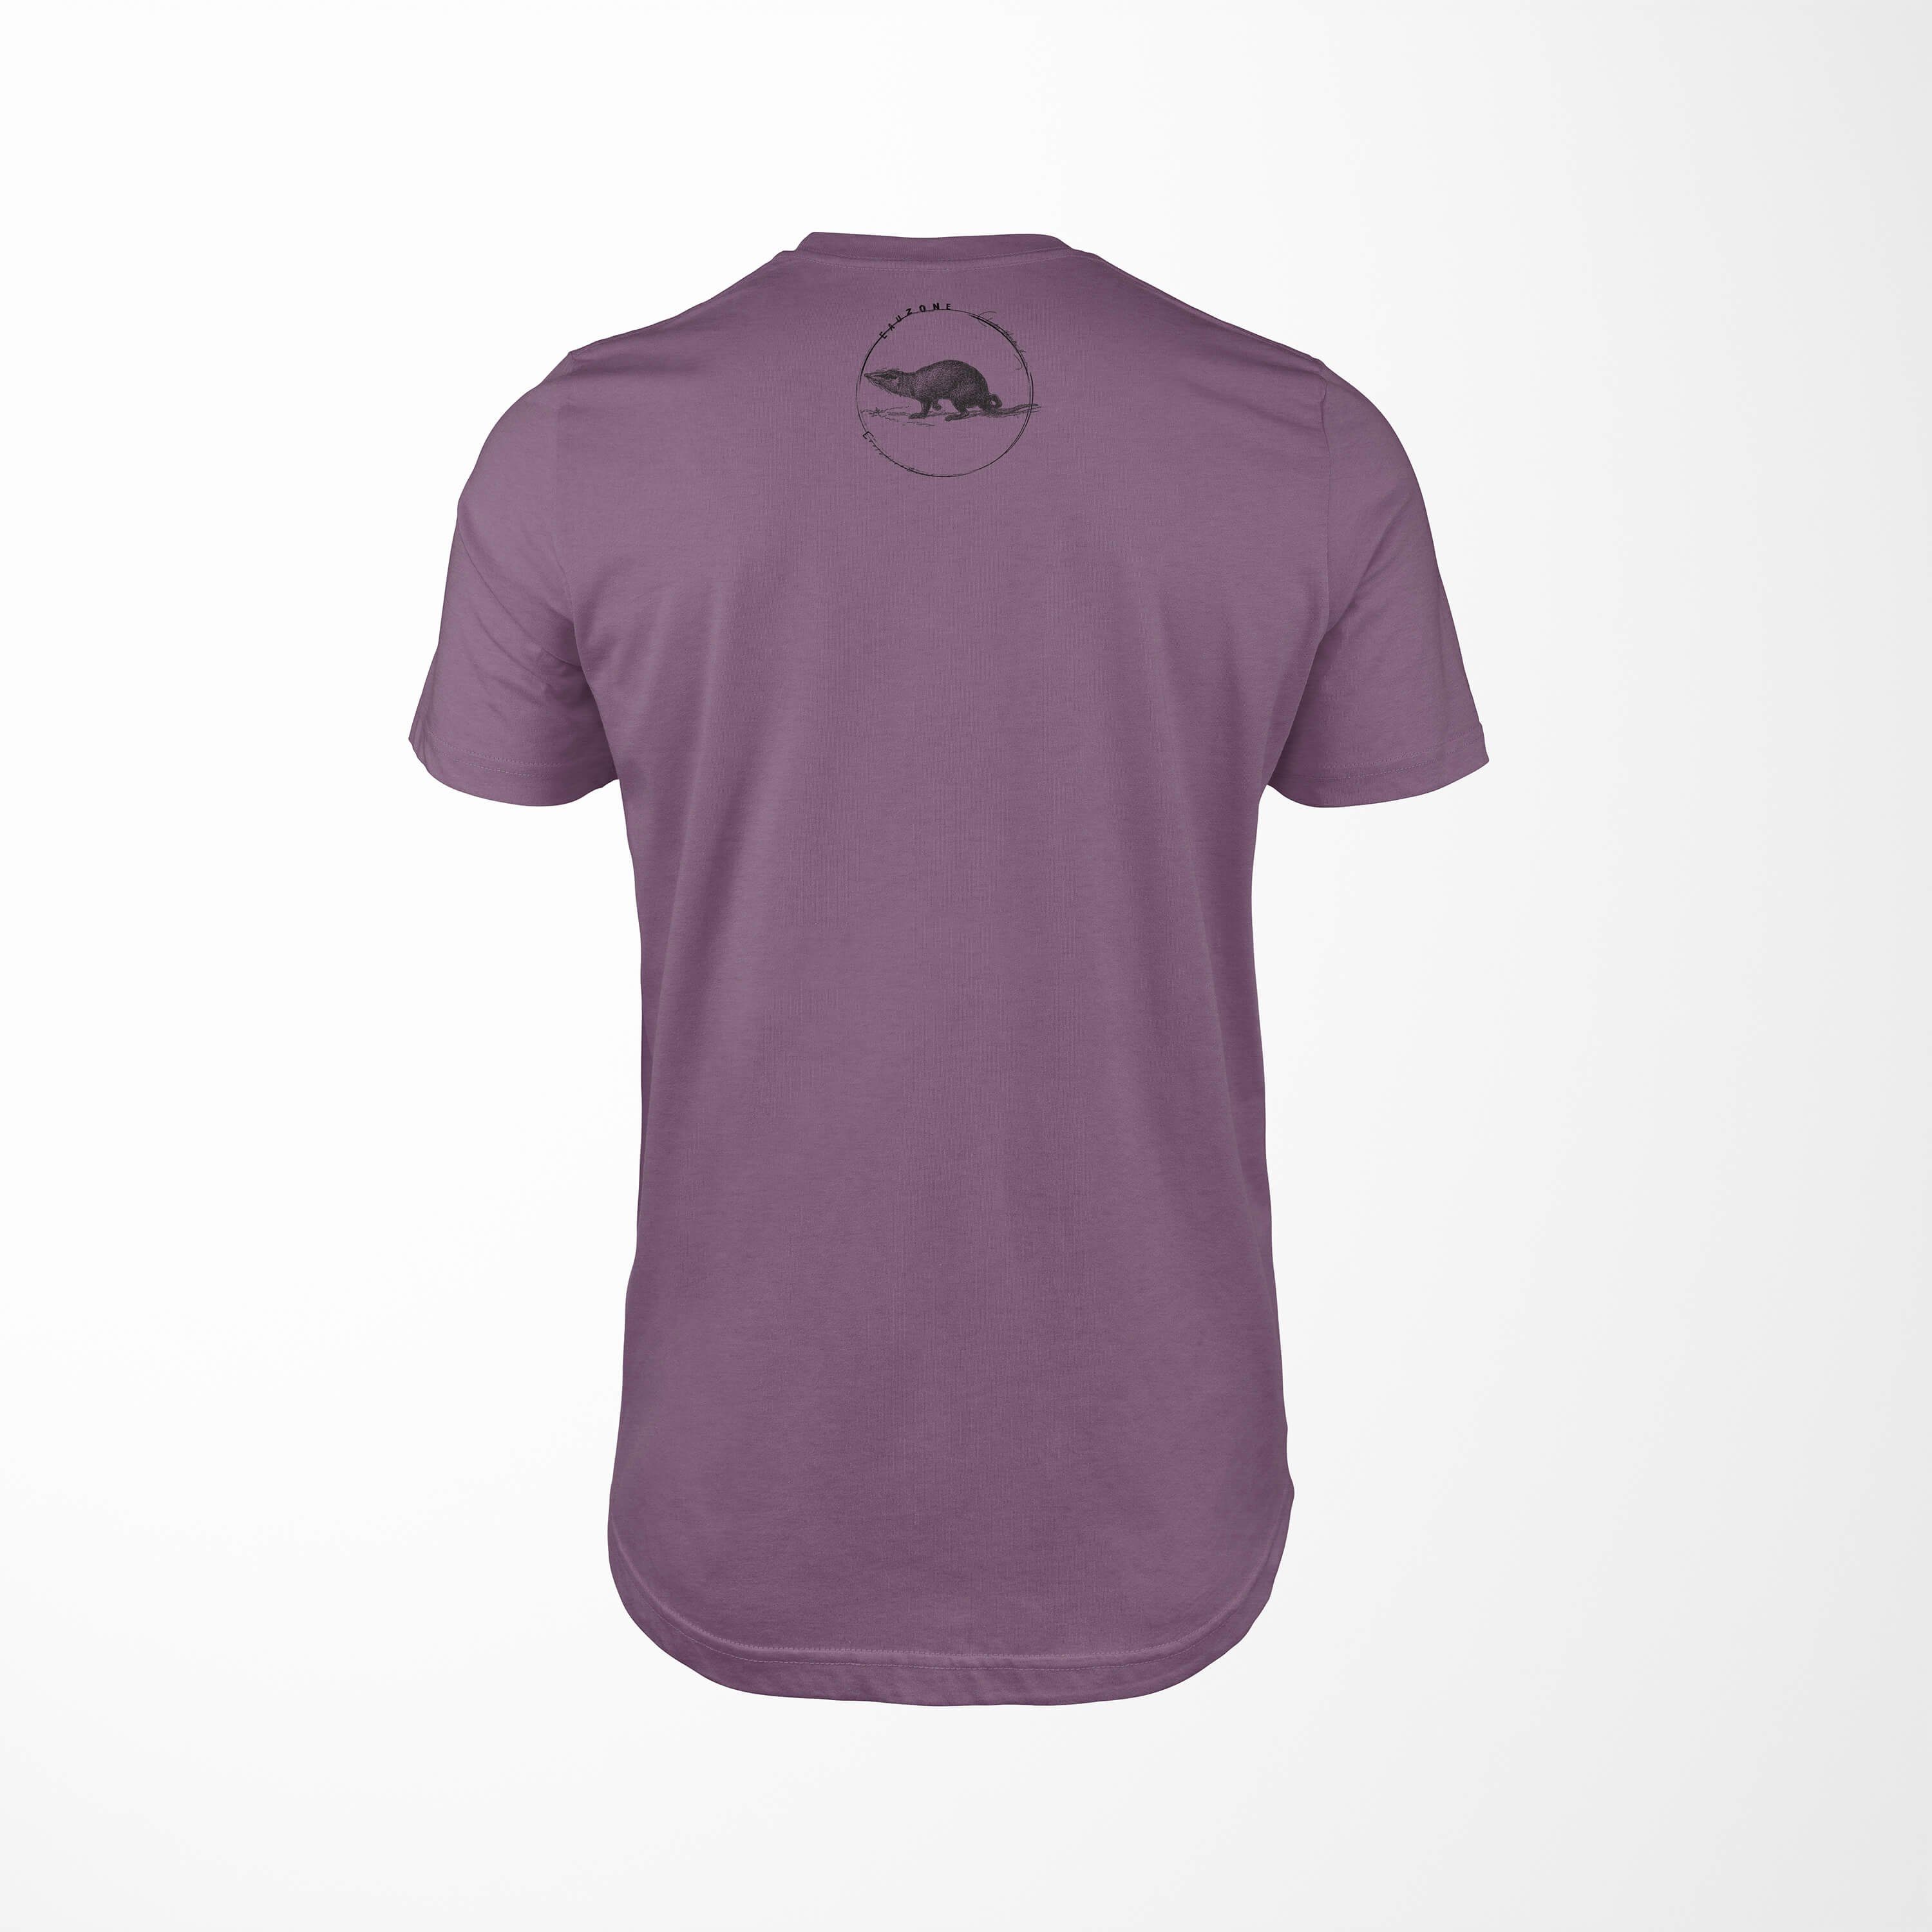 Herren Evolution Shiraz T-Shirt Art Sinus Rattenigel T-Shirt